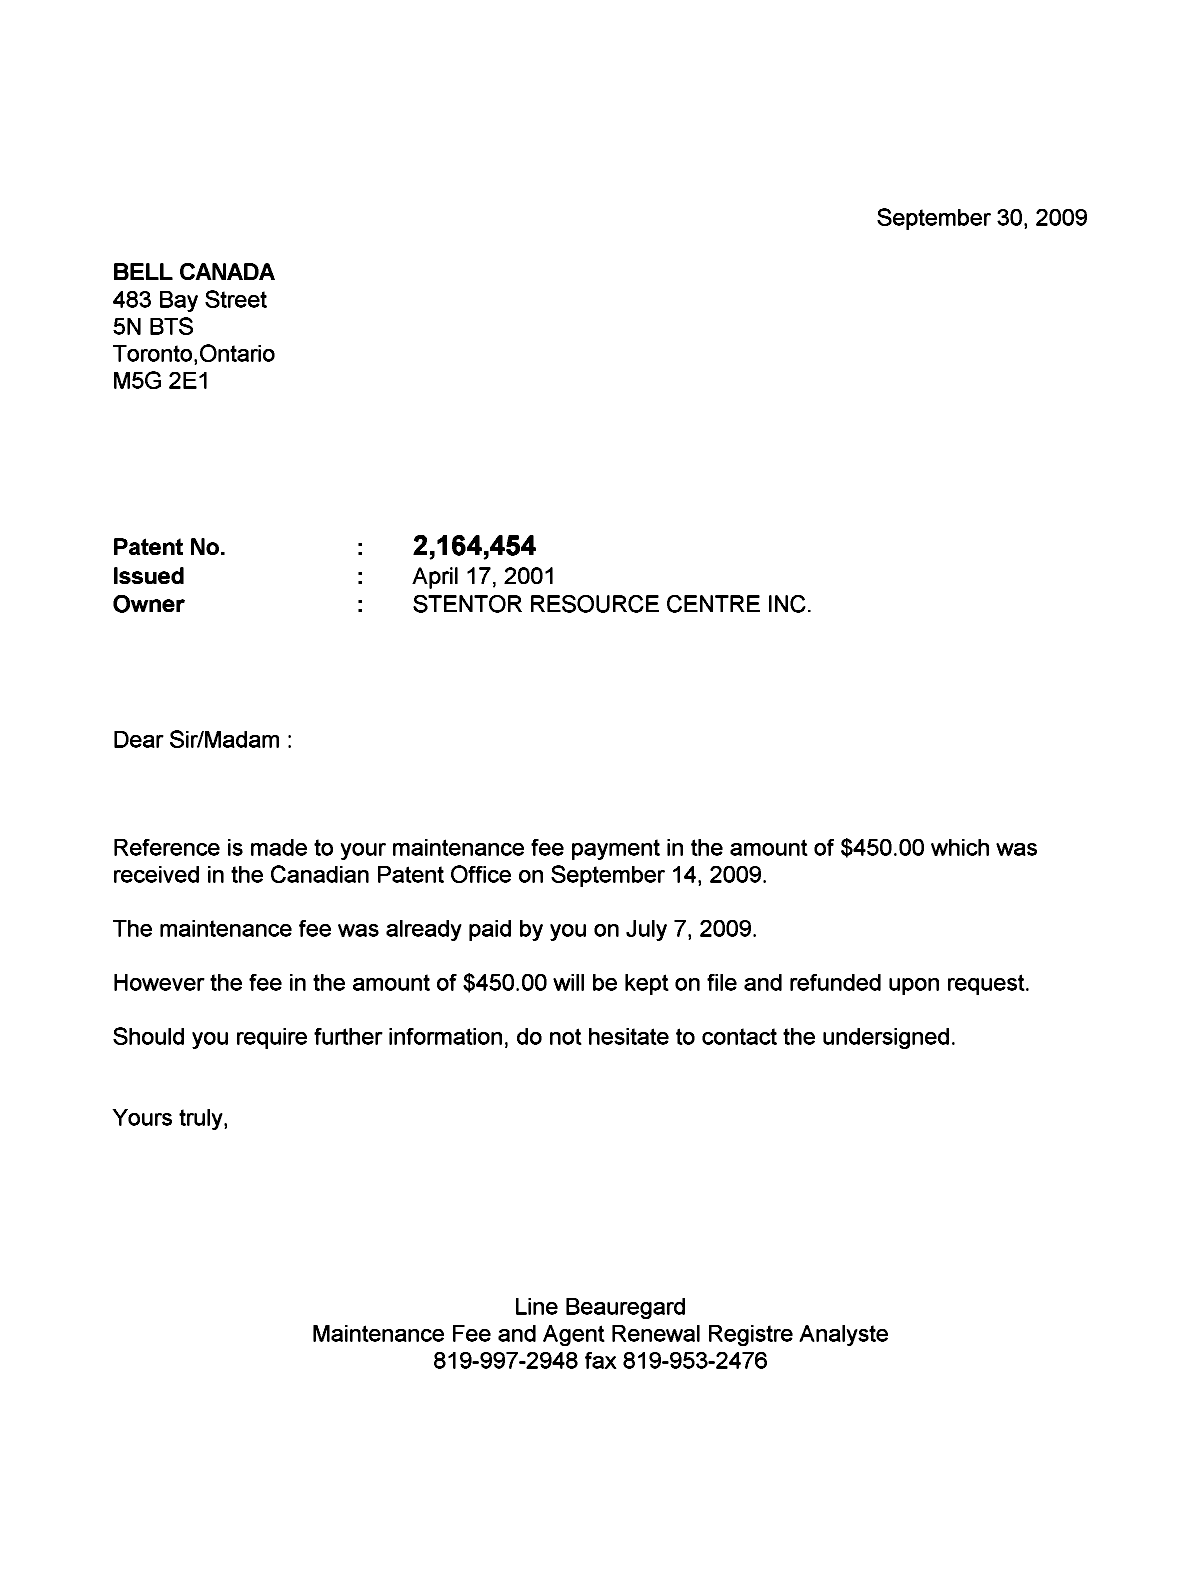 Canadian Patent Document 2164454. Correspondence 20090930. Image 1 of 1